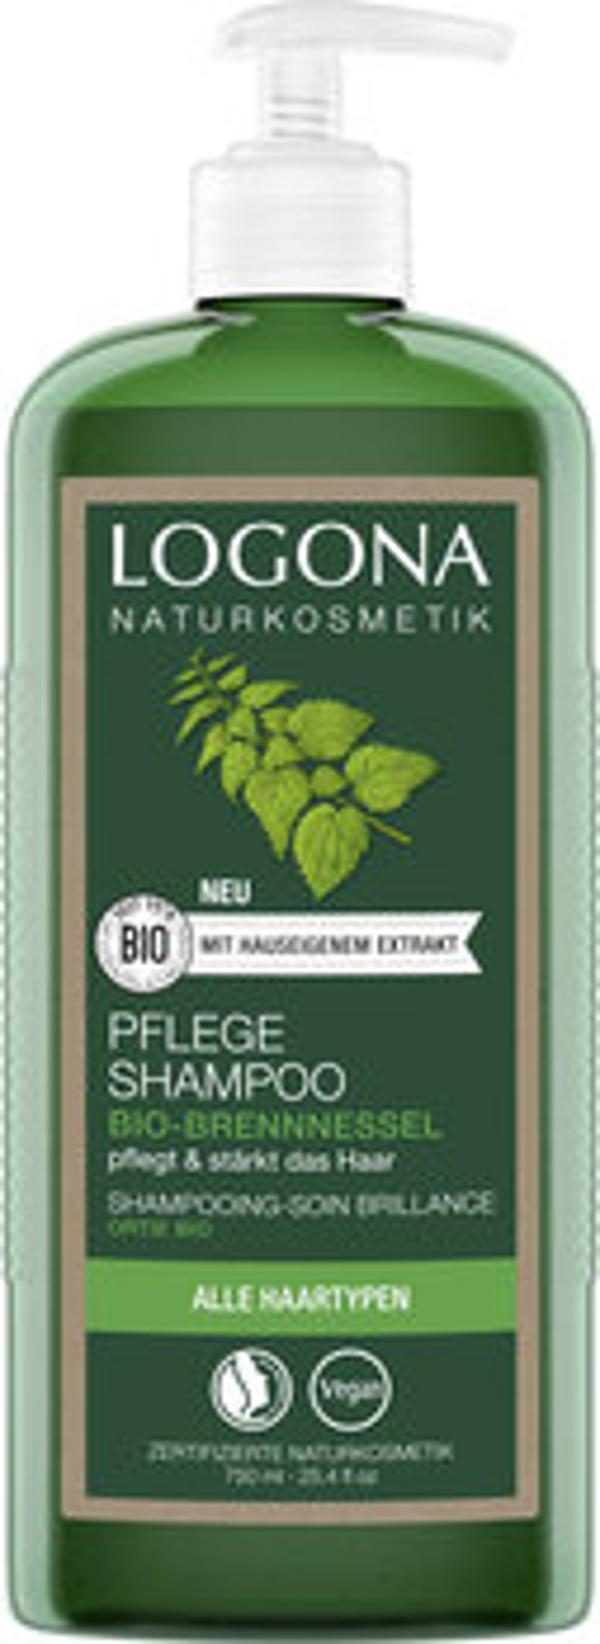 Produktfoto zu Pflege Shampoo Brennessel 750ml